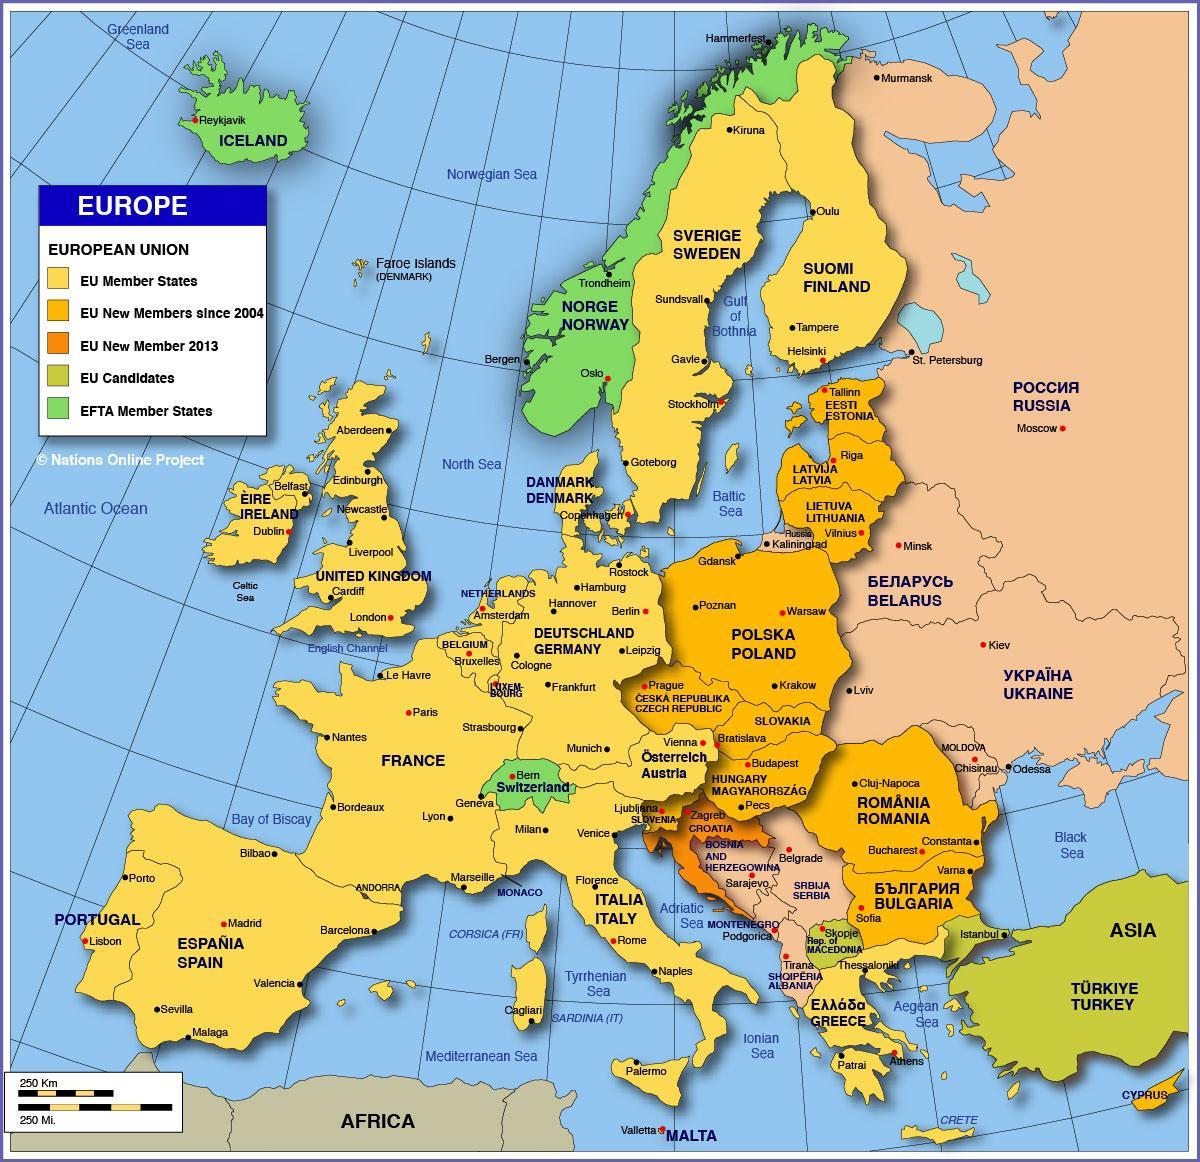 Moskva na karti Europe